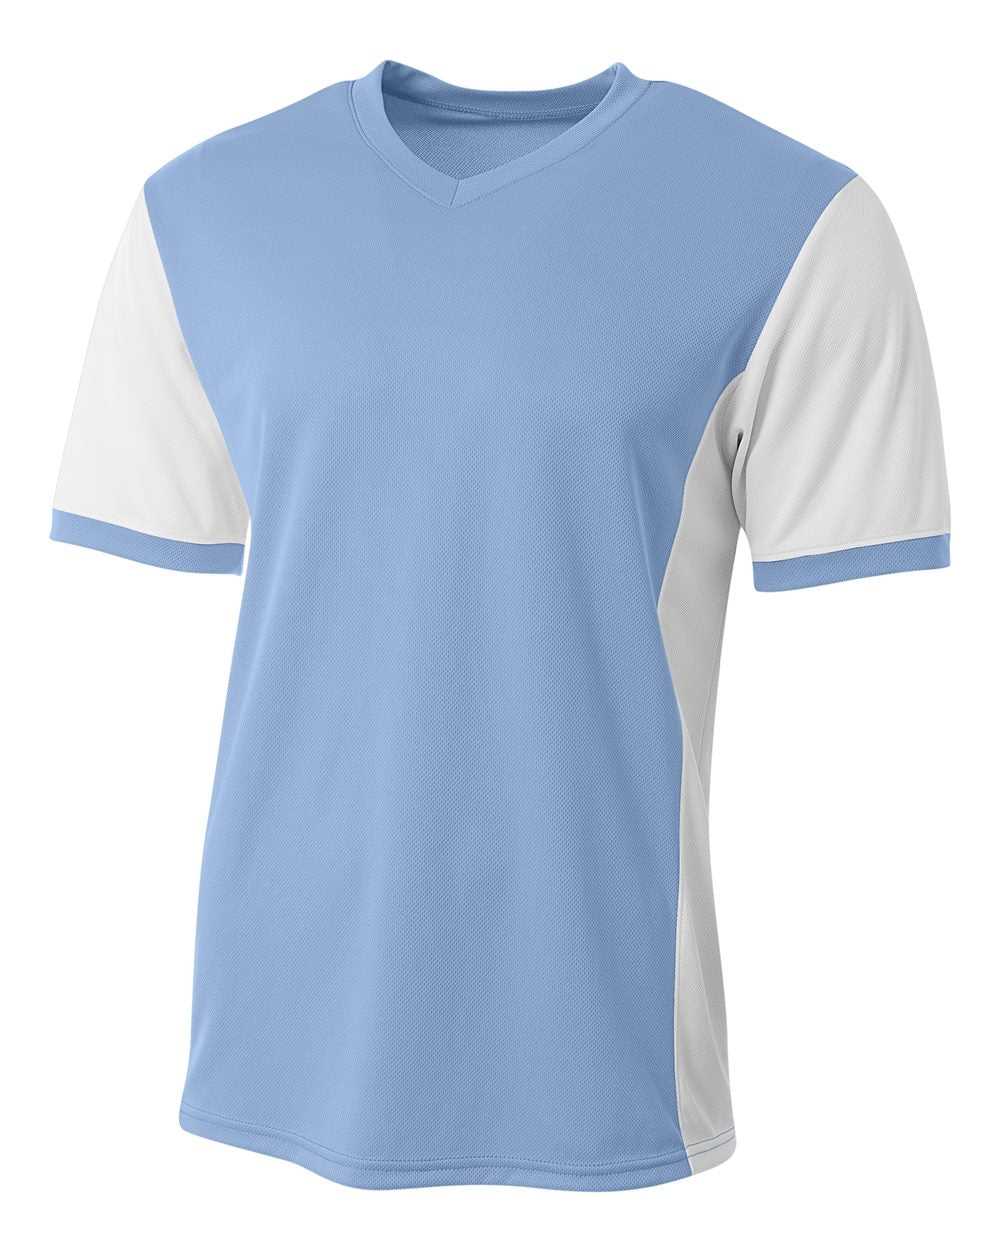 A4 NB3017 Premier Soccer Jersey - Light Blue White - HIT a Double